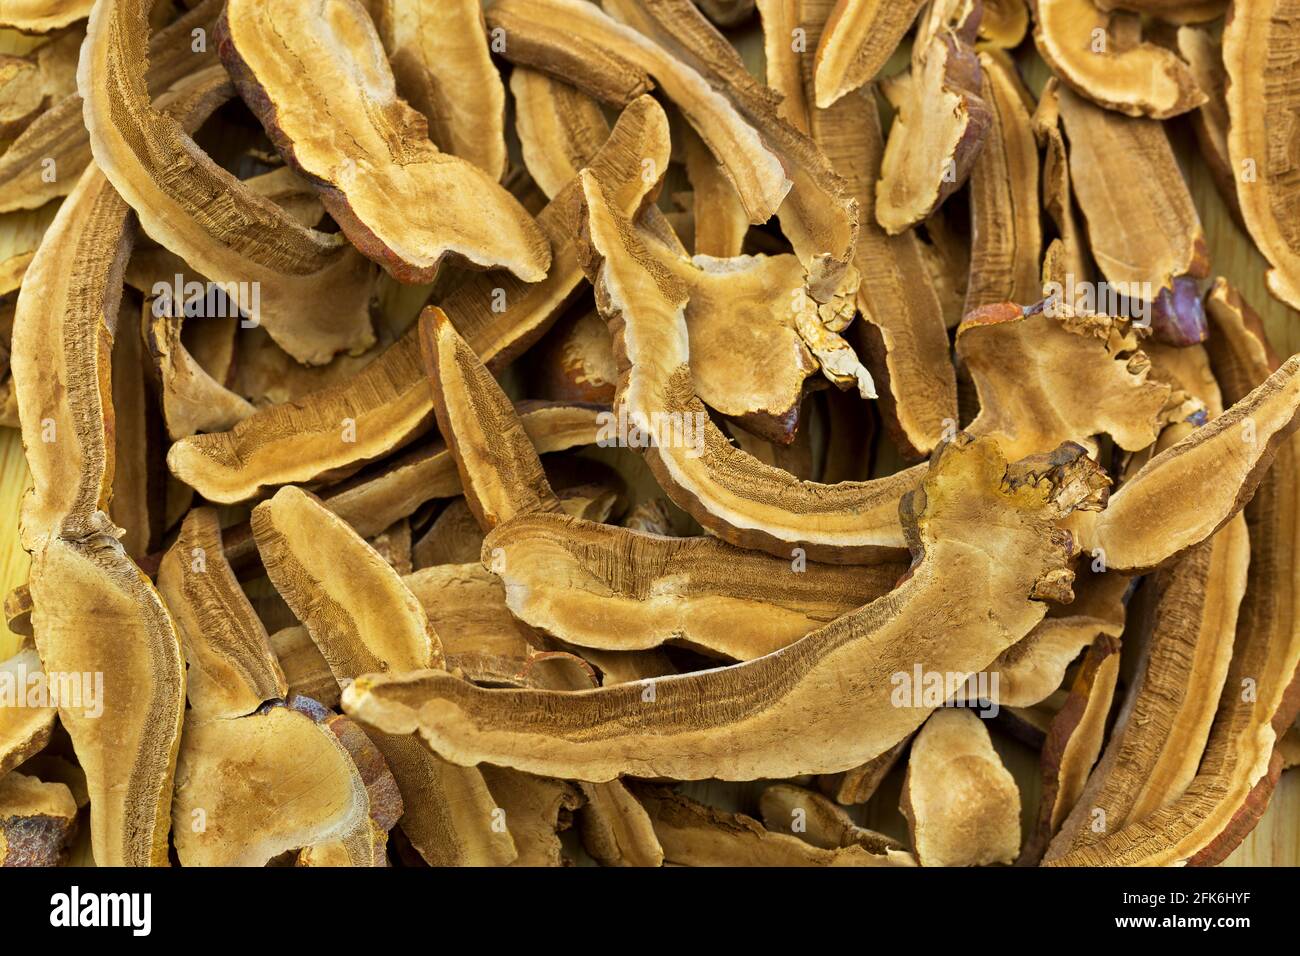 Closeup top view texture di Lingzhi reishi a fette di funghi secchi. È fungo medicinale nella medicina tradizionale cinese Foto Stock